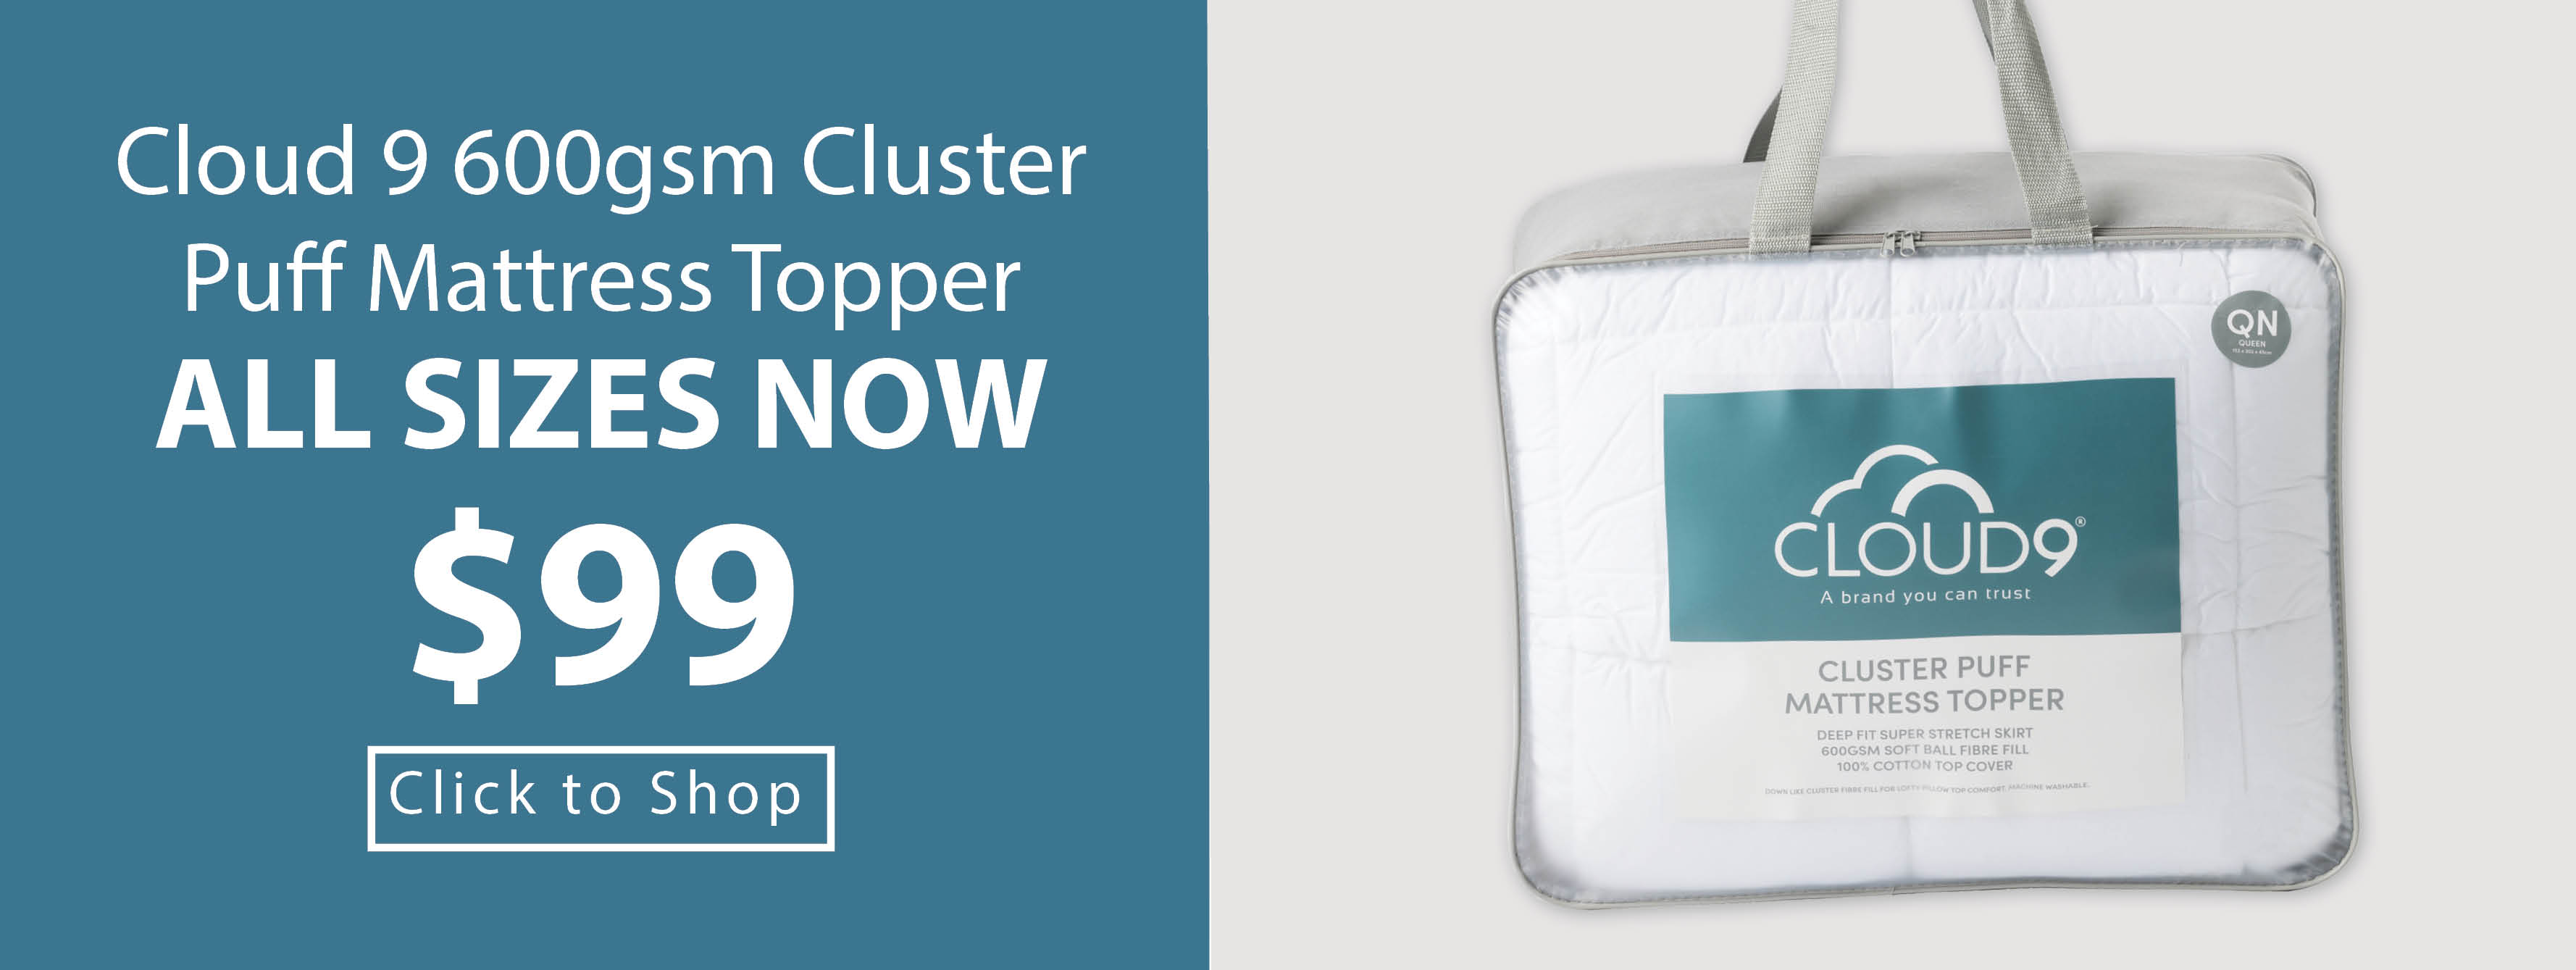 Cloud 9 Cluster Puff Mattress Toppers $99